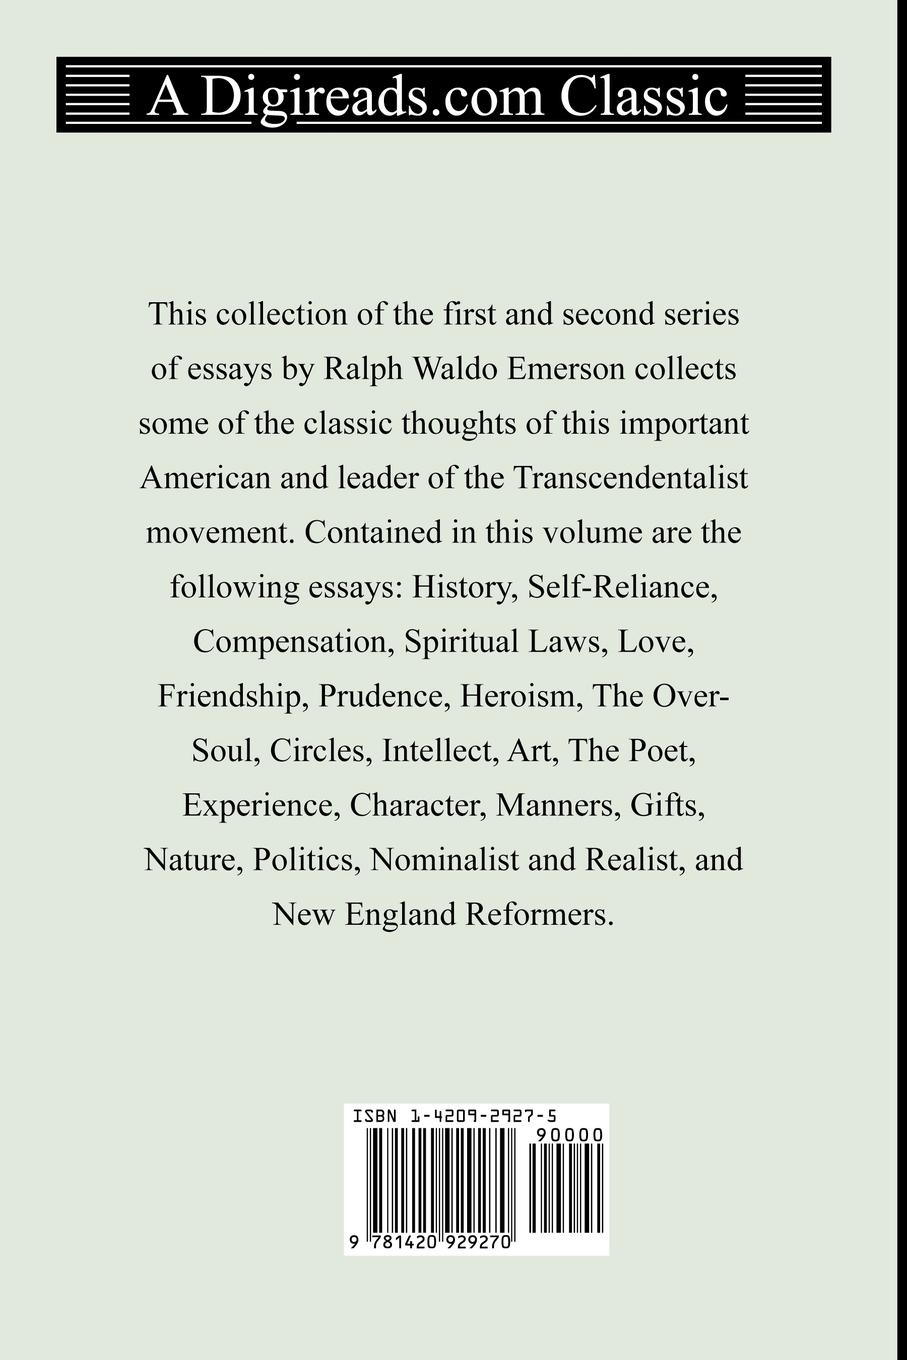 Essays - Emerson, Ralph Waldo